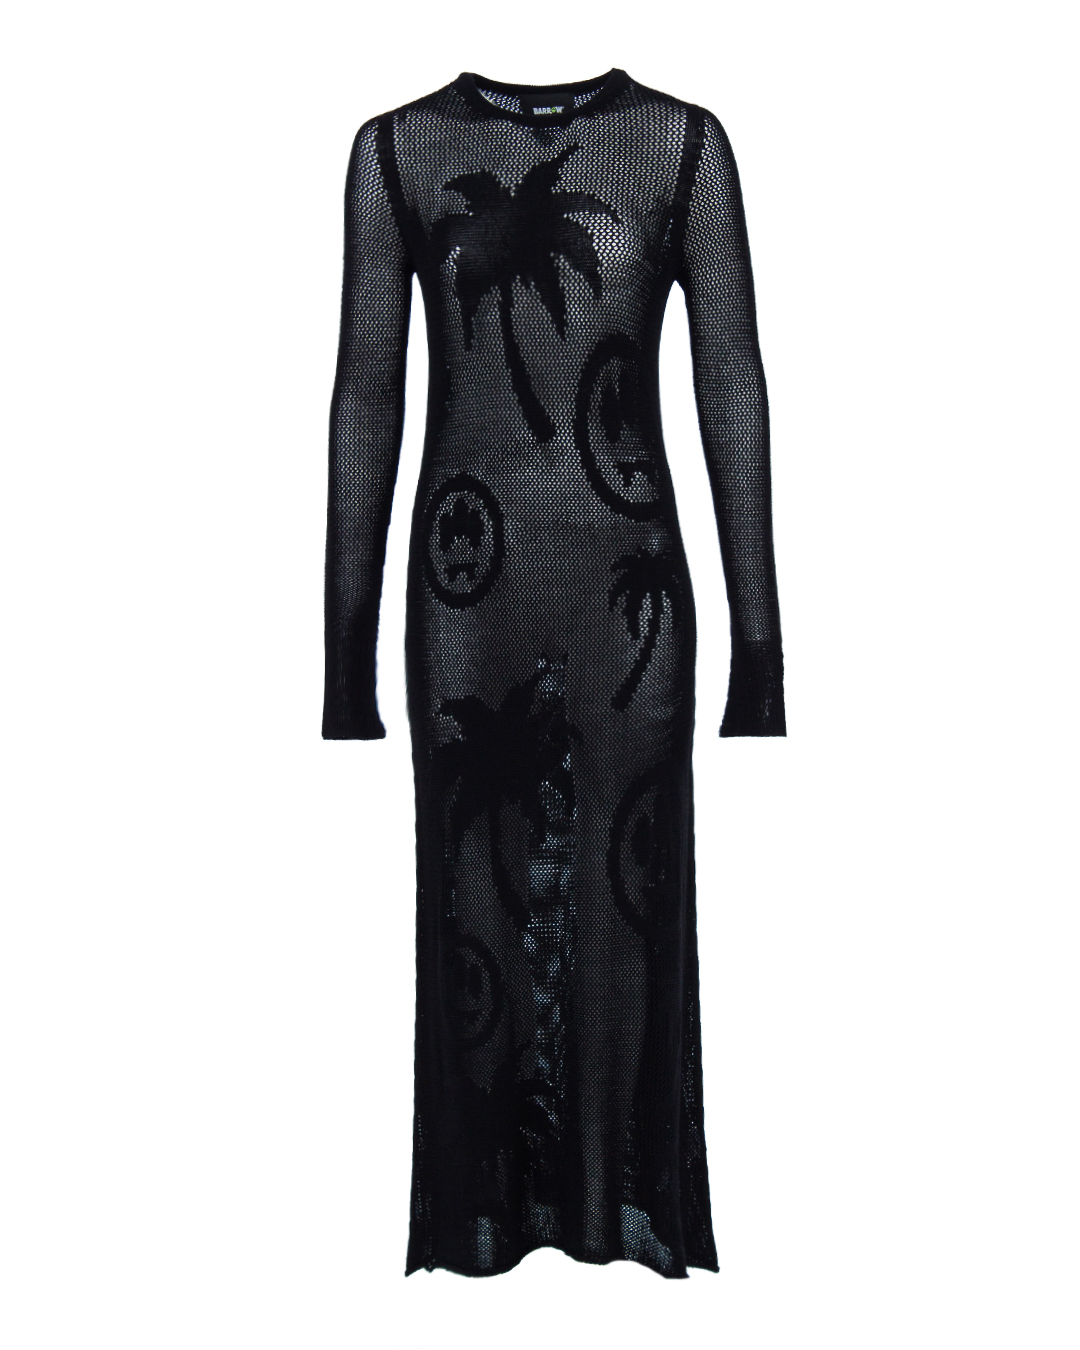 BARROW вязаное платье-сетка  артикул 034079 марки BARROW купить за 46600 руб.